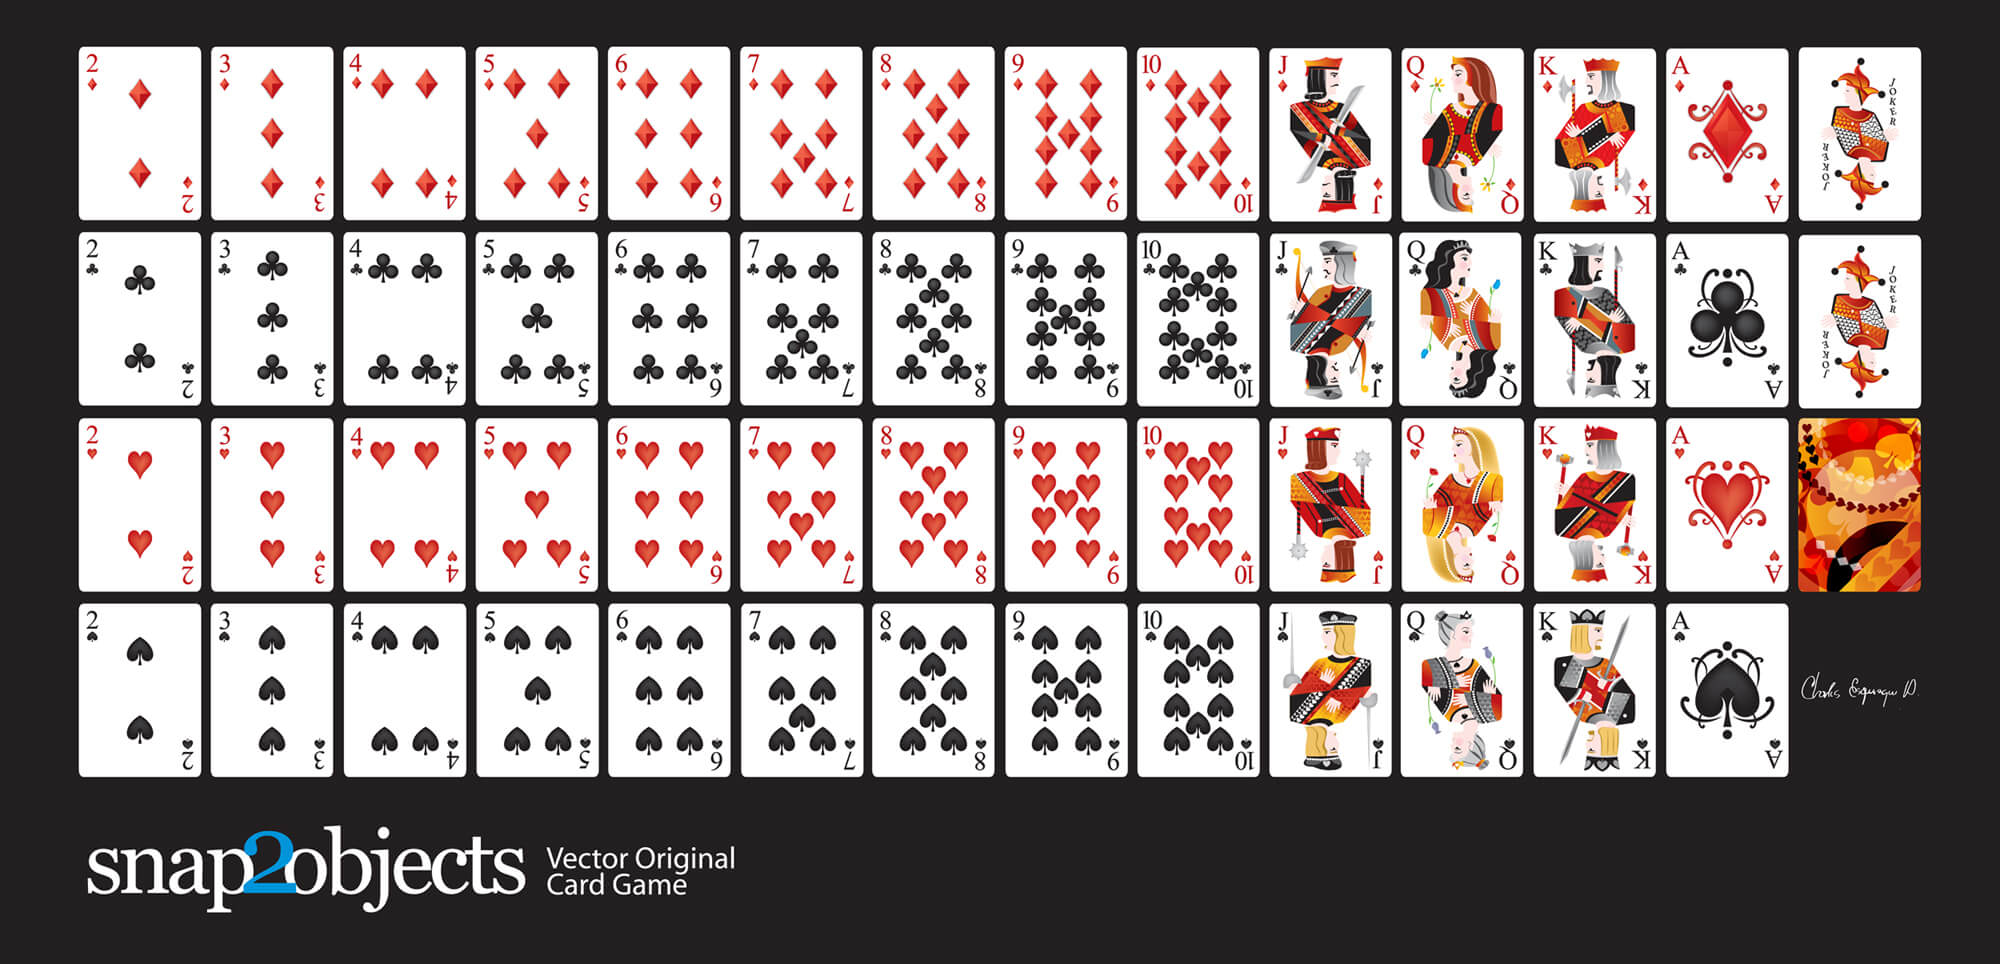 Playing Card Vector Art At Getdrawings | Free Download regarding